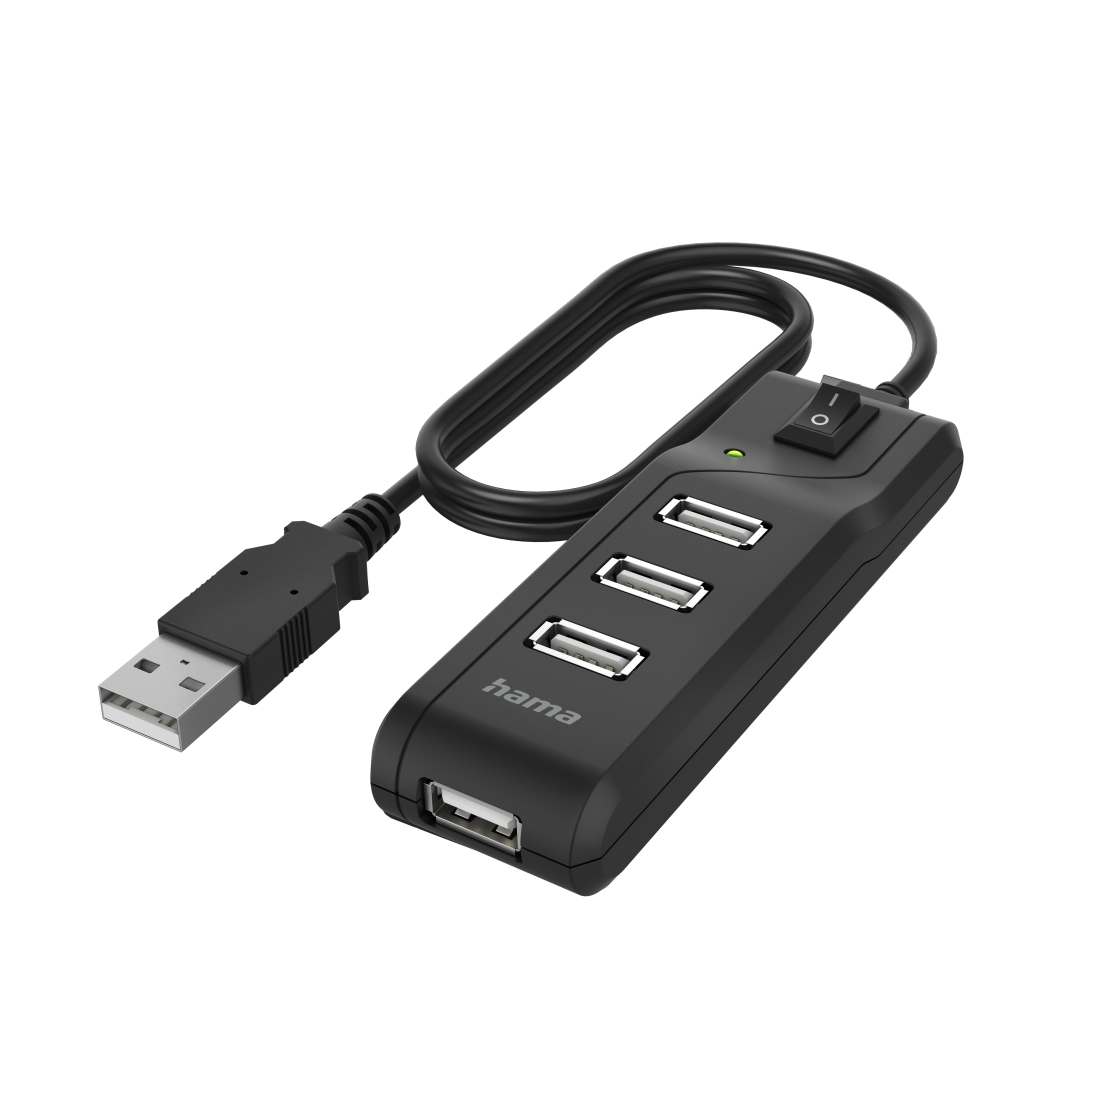 00200118 Hama USB Hub, 4 Ports, USB 2.0, 480 Mbit/s, On/Off Switch